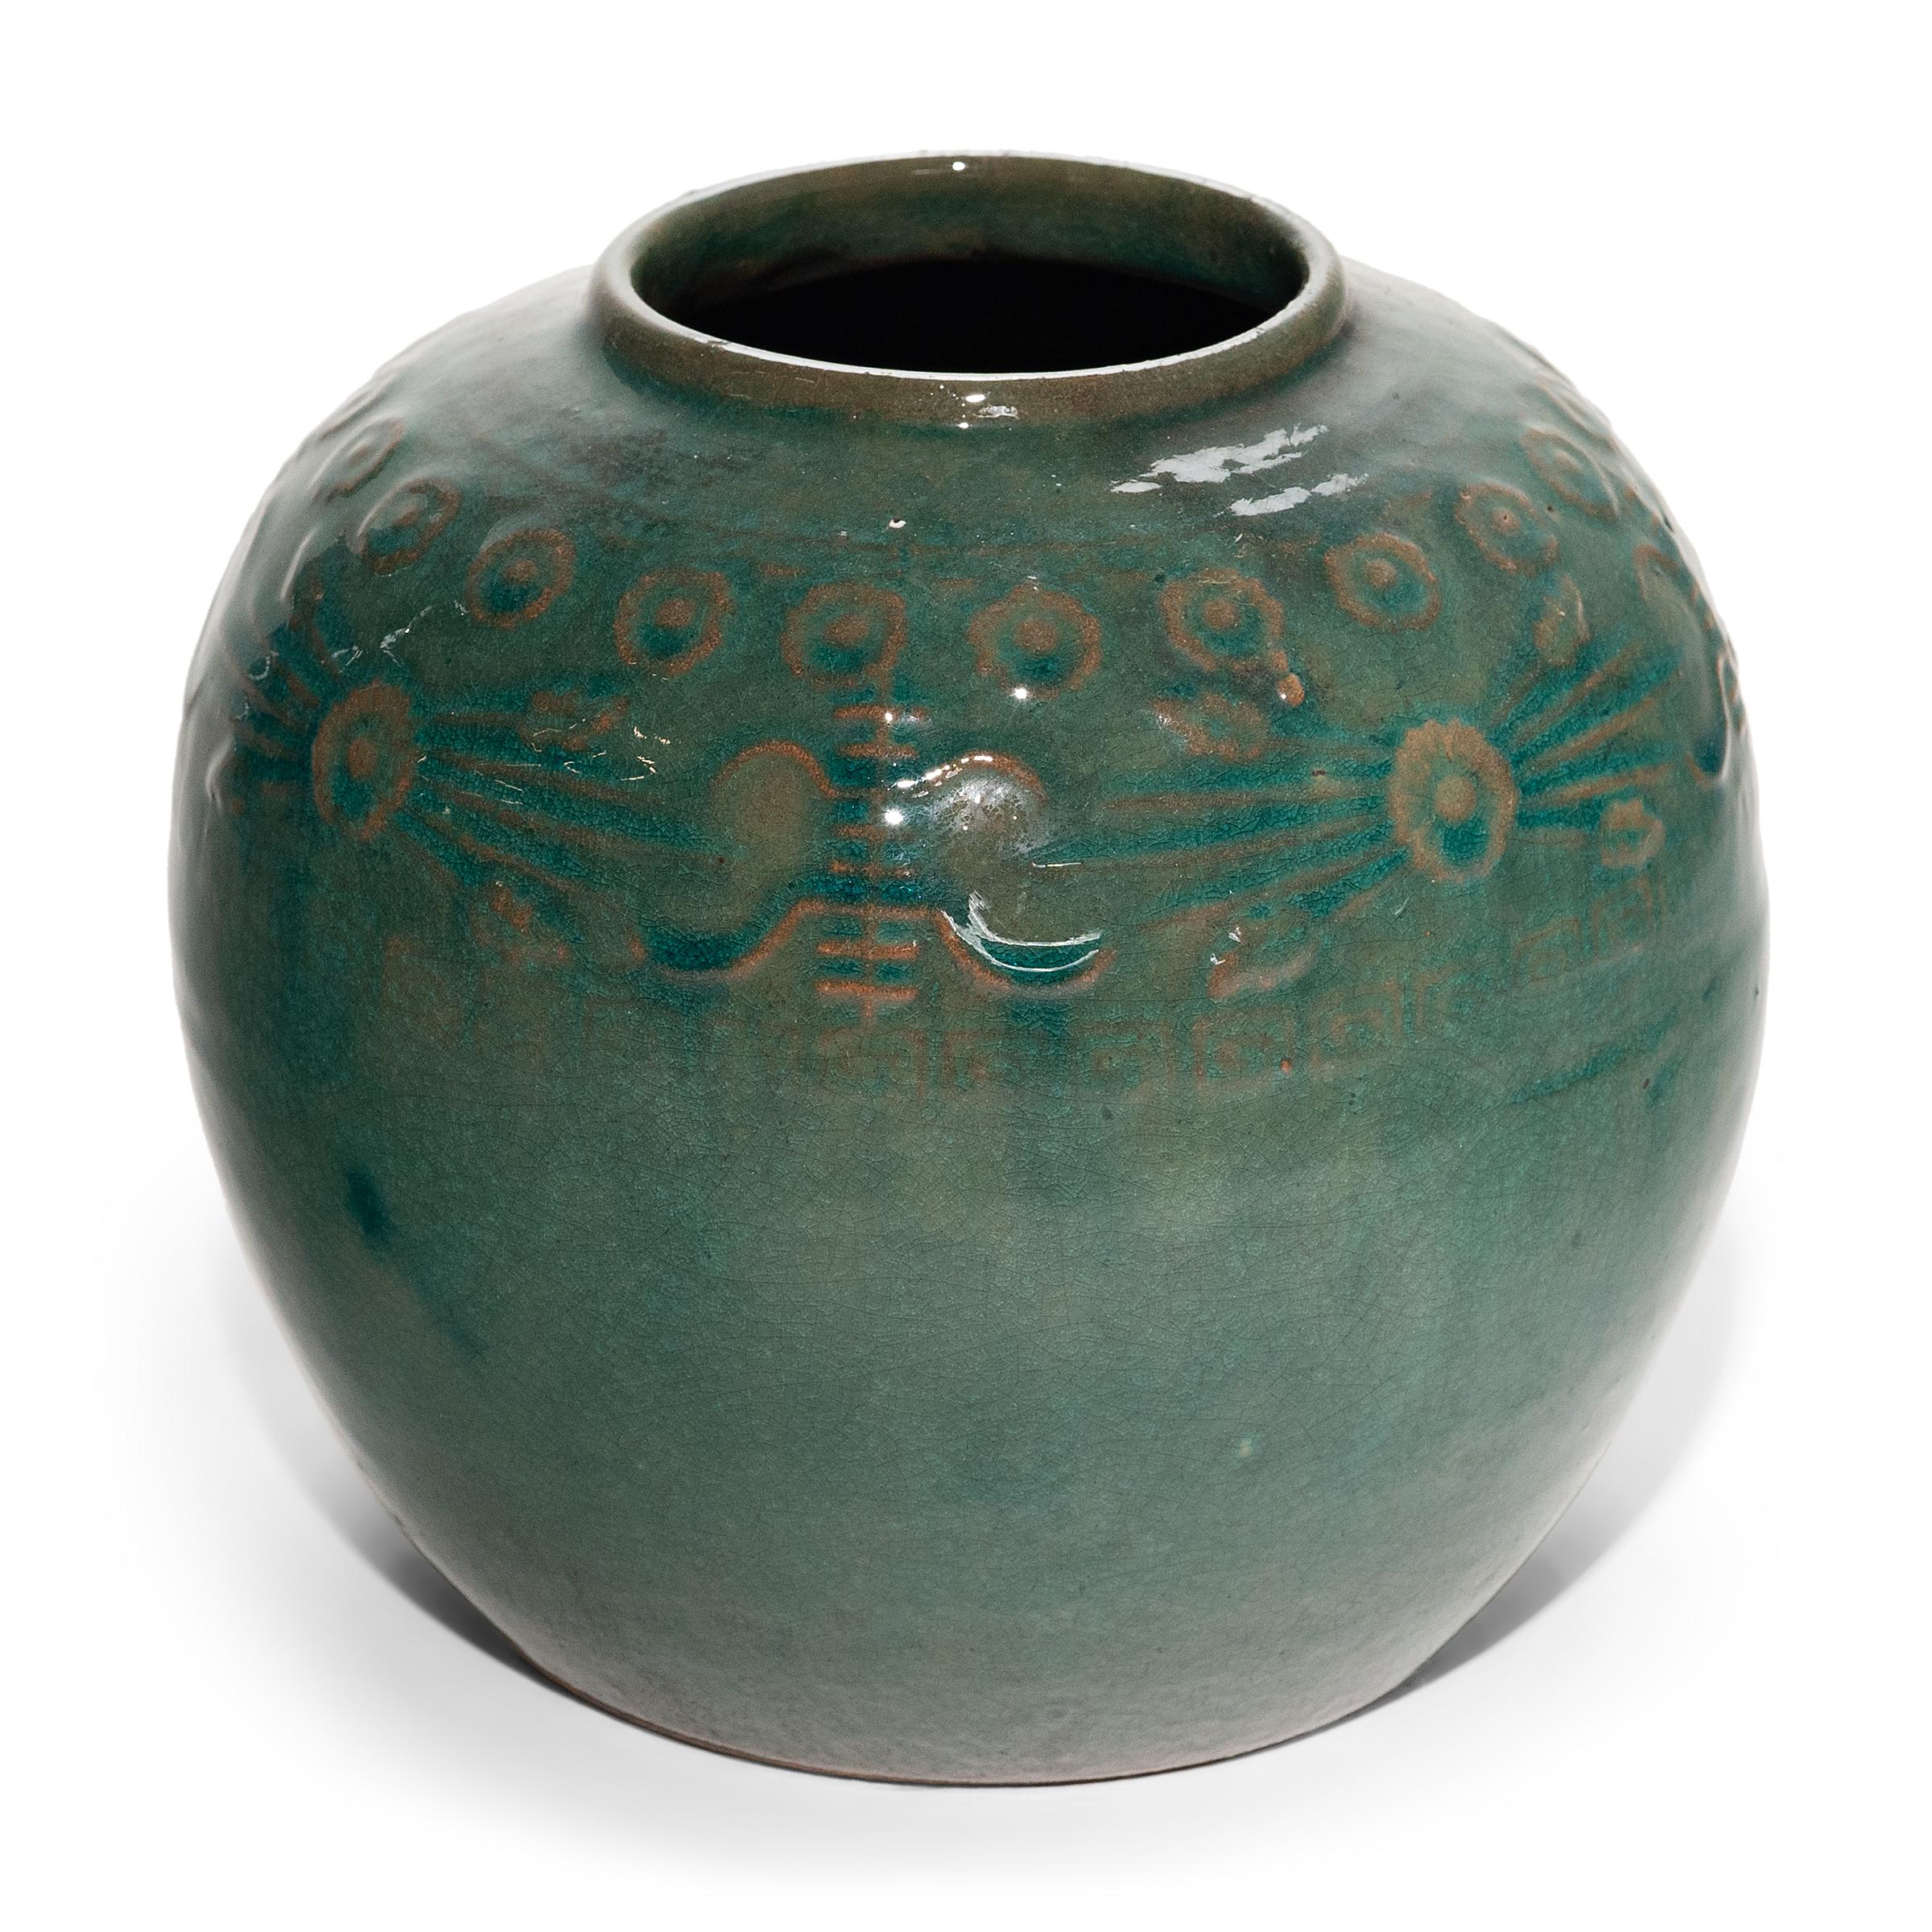 Chinese Export Chinese Jade Green Salt Jar, c. 1900